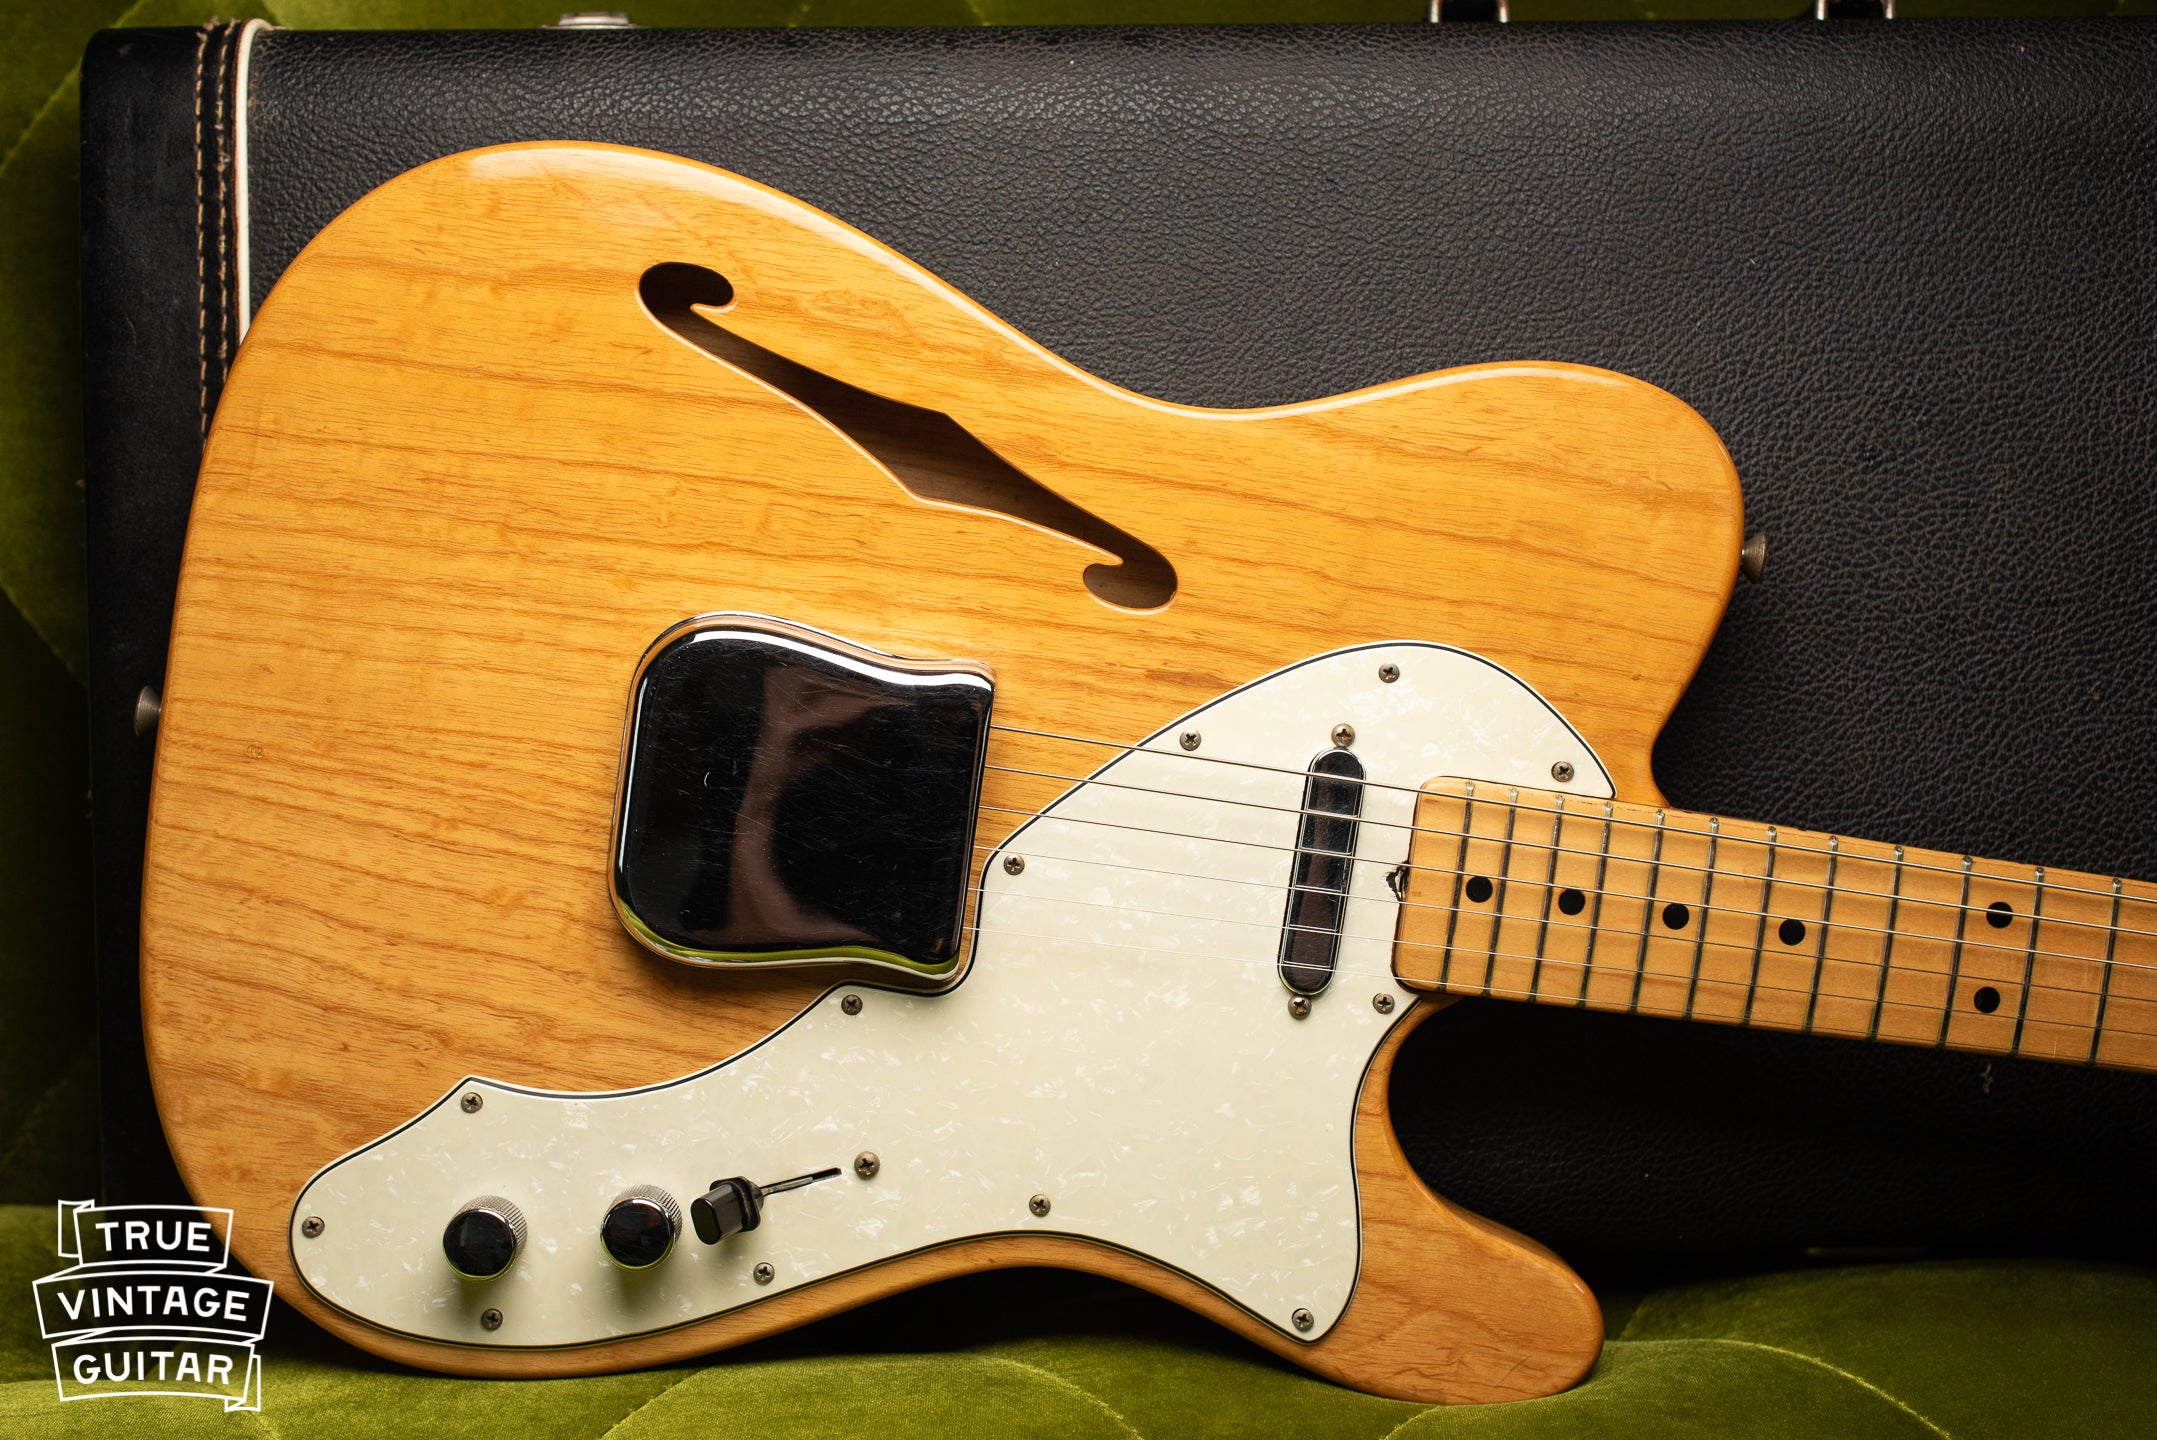 Vintage Fender Telecaster Thinline guitar 1969